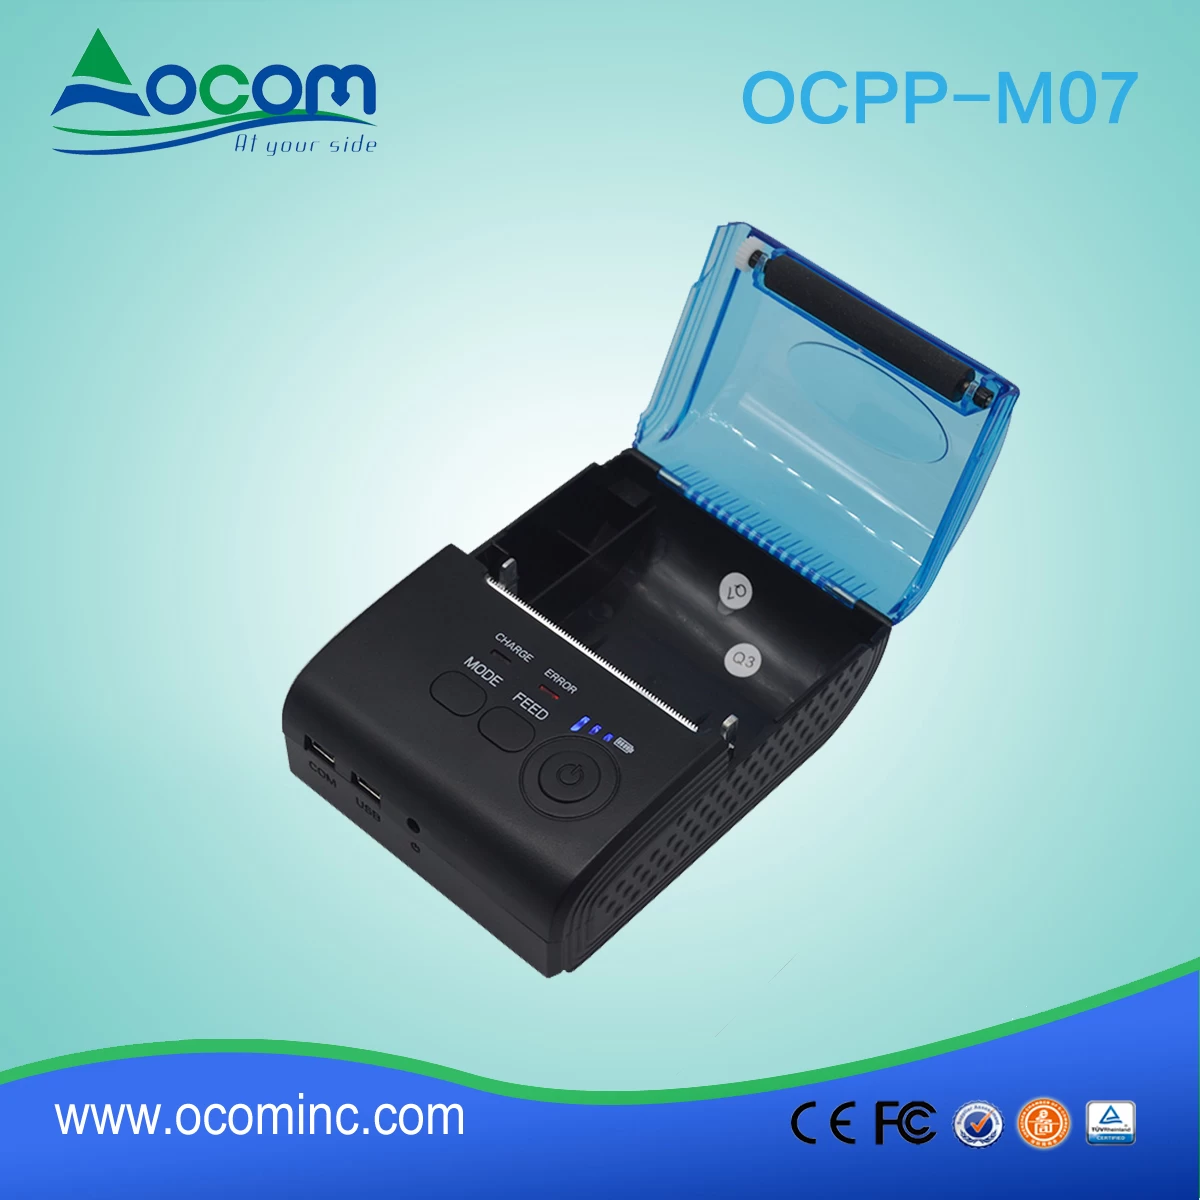 OCPP-M07 China Factory 58mm Mini Impresora Portátil de Recibos